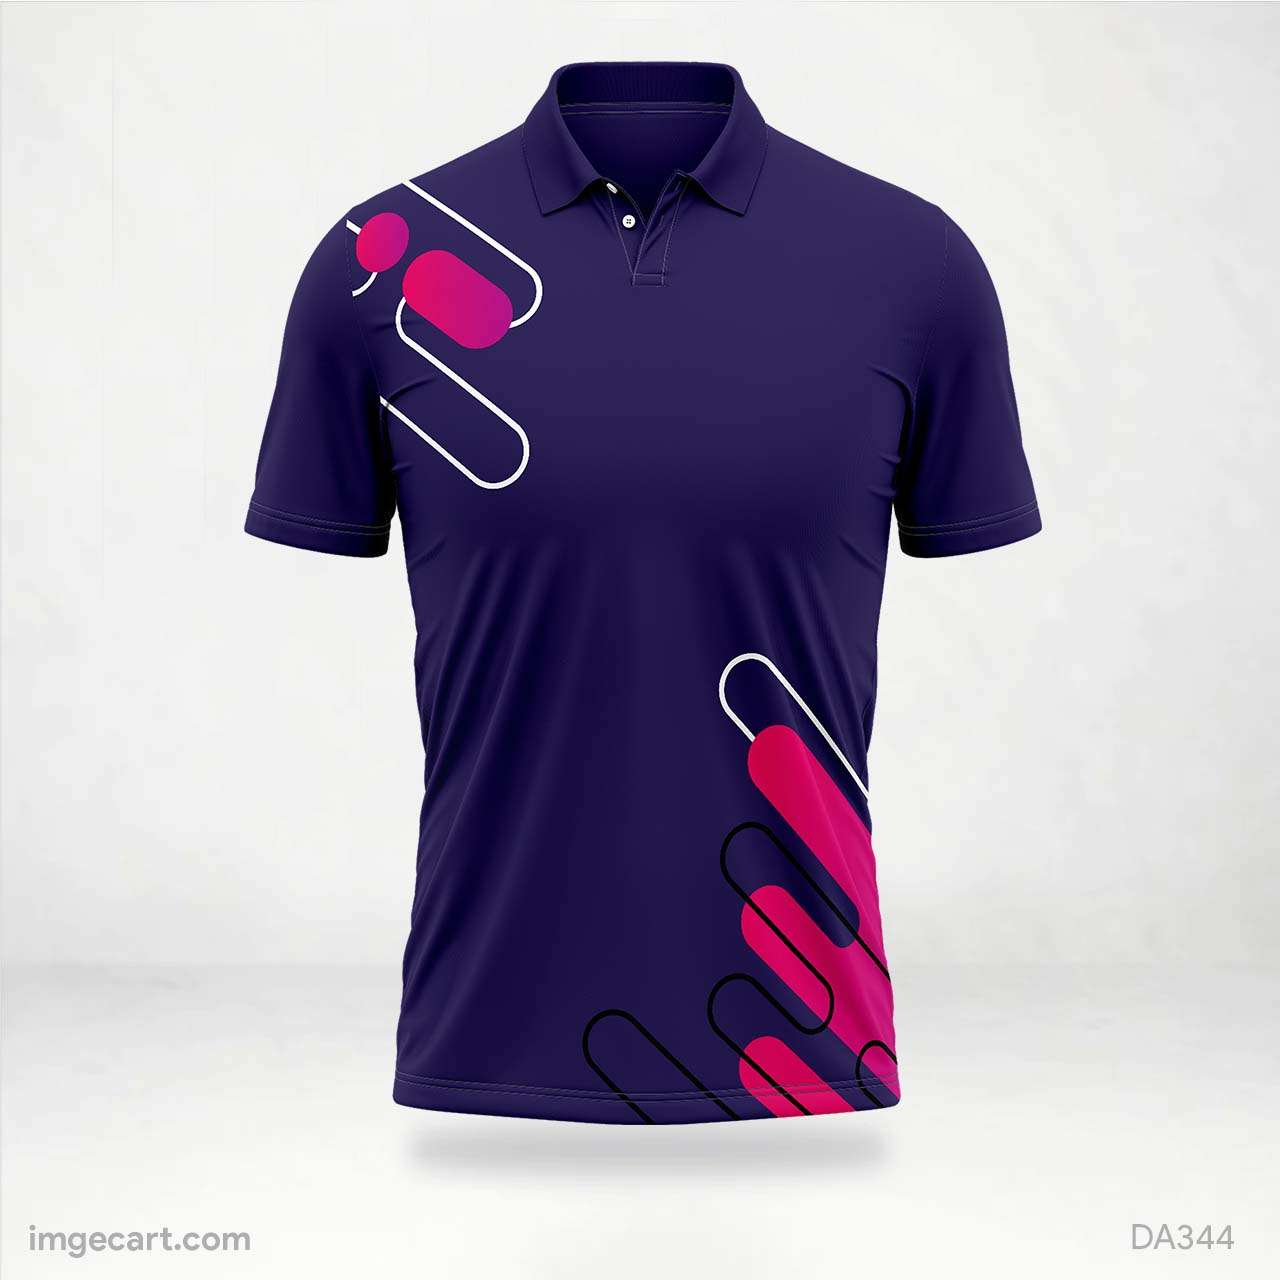 Cricket jersey design purple with pink - imgecart